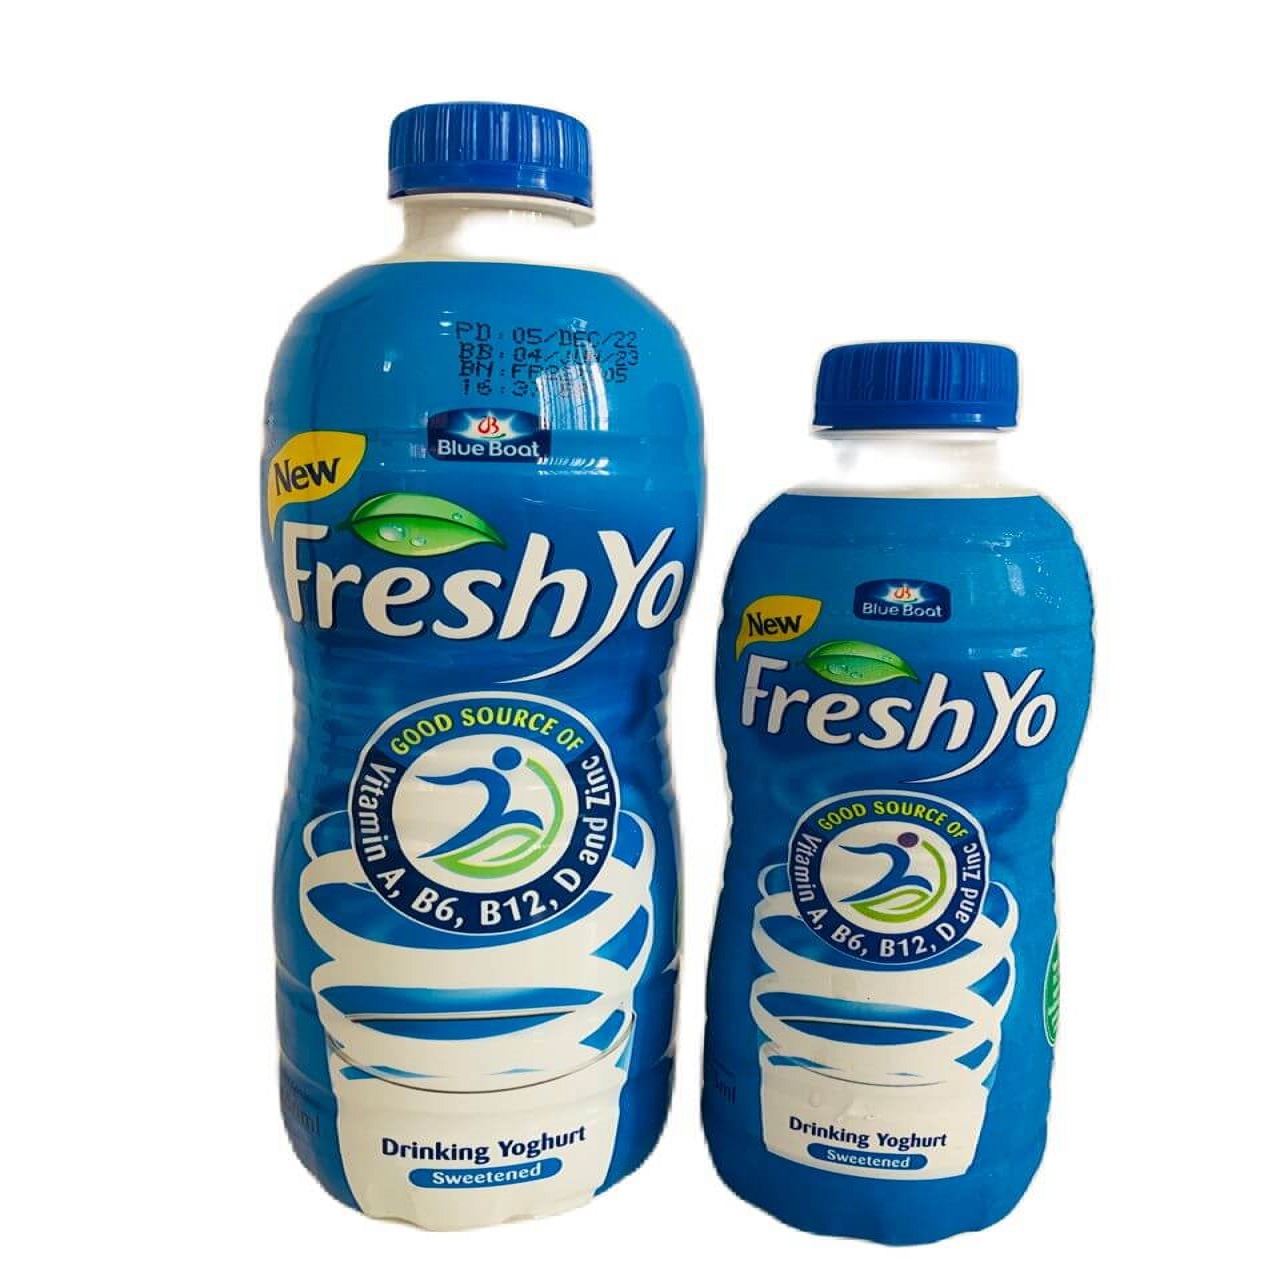 2 bottles of freshyo yoghurt